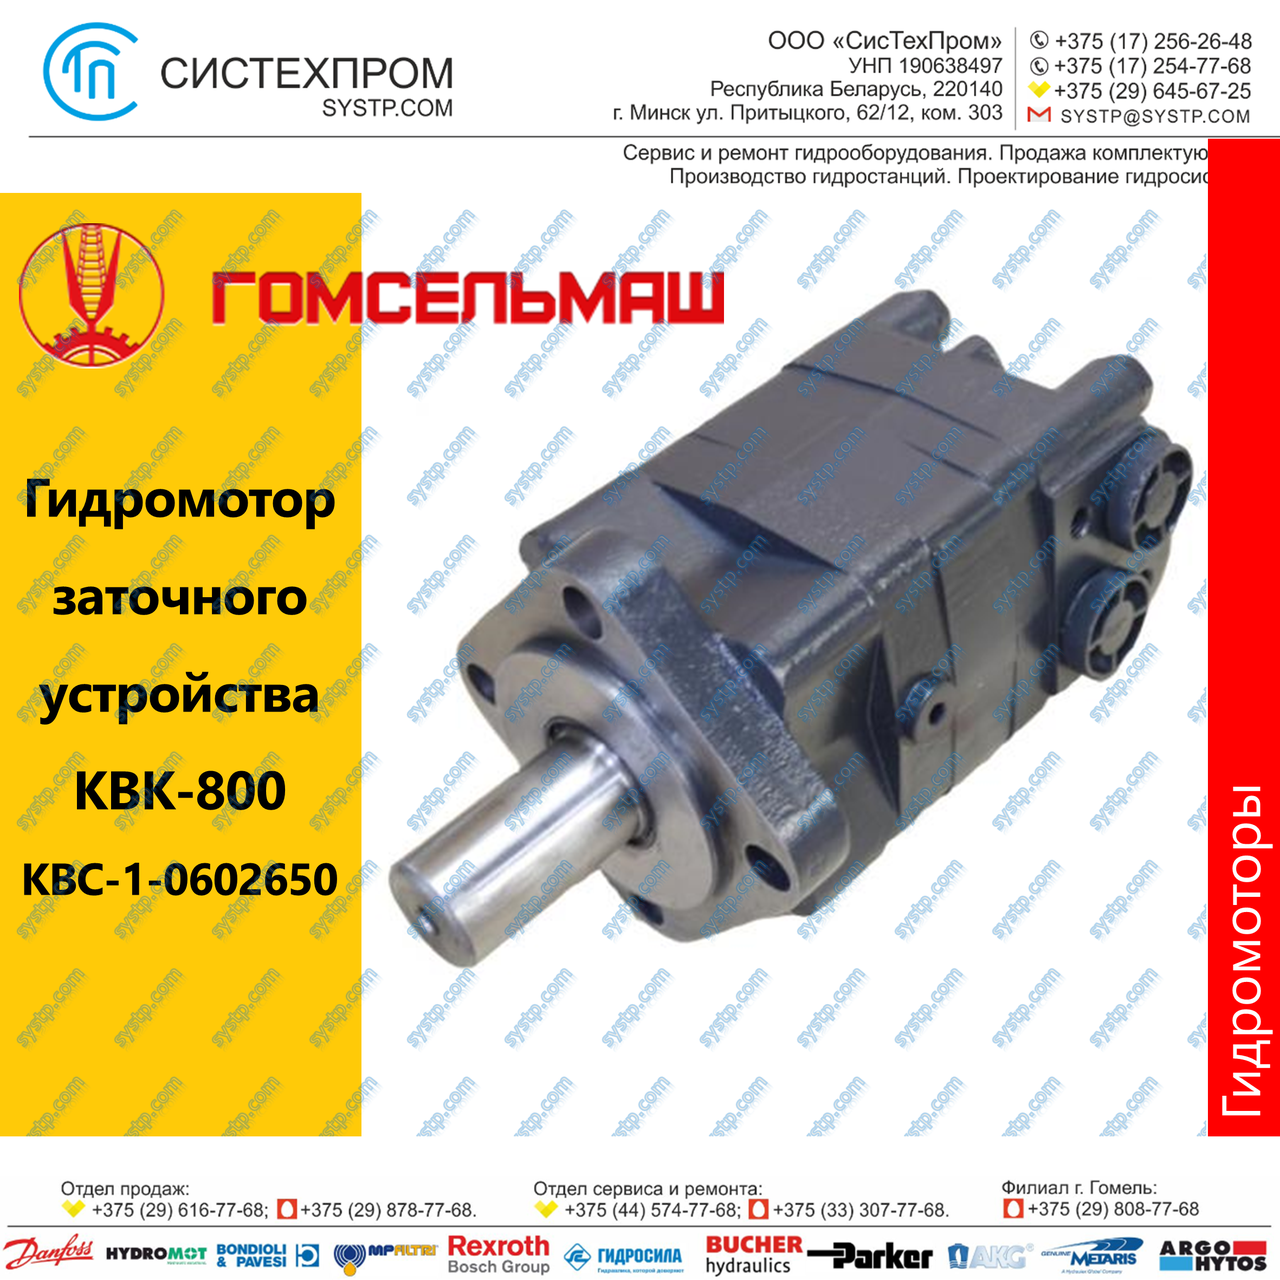 Гидромотор КВС-1-0602650 заточного устройства